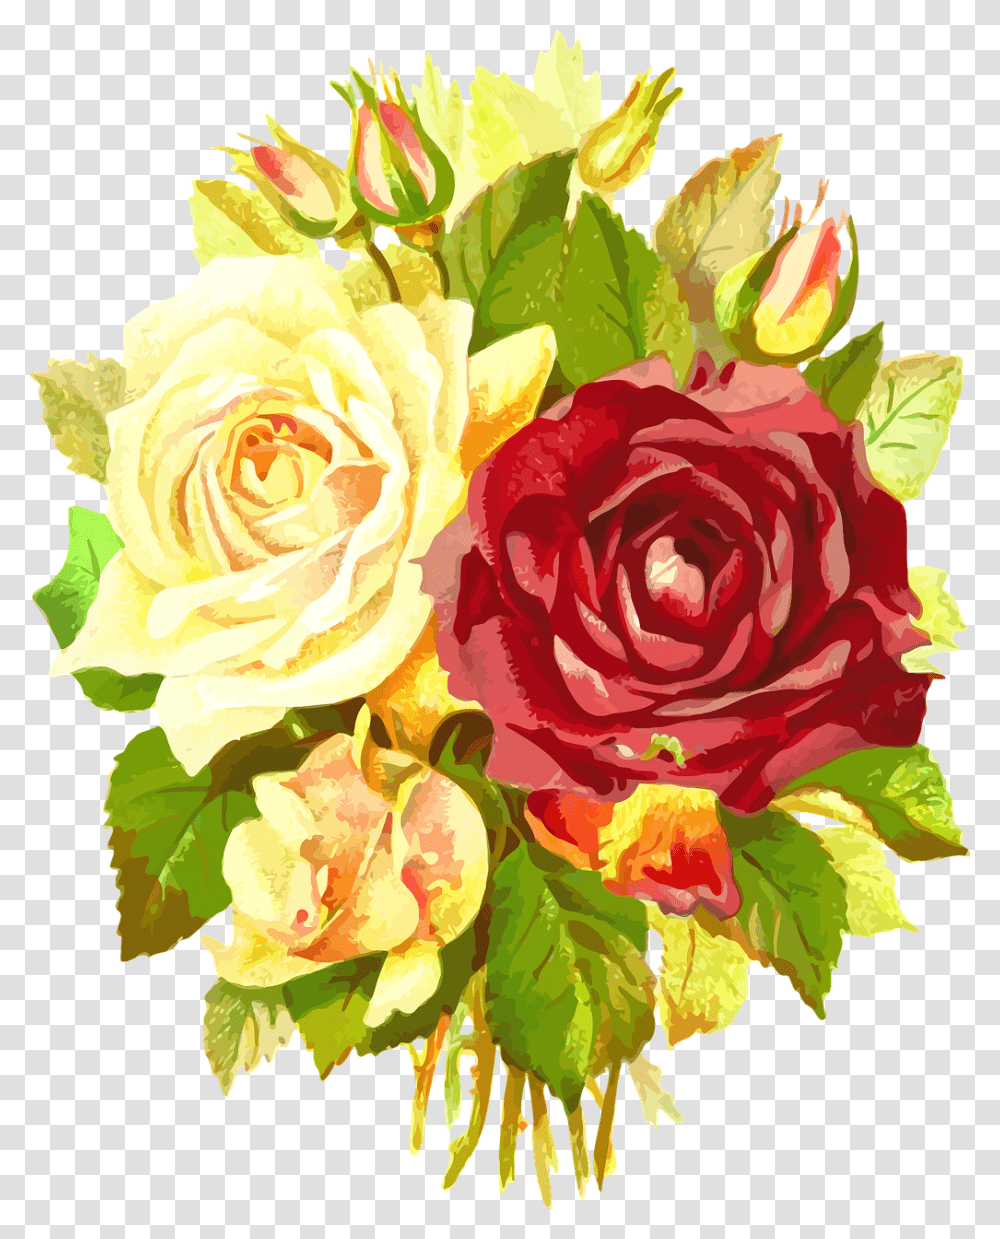 Roses Are Red Violets Are Blue Flowers, Plant, Blossom, Flower Arrangement, Flower Bouquet Transparent Png